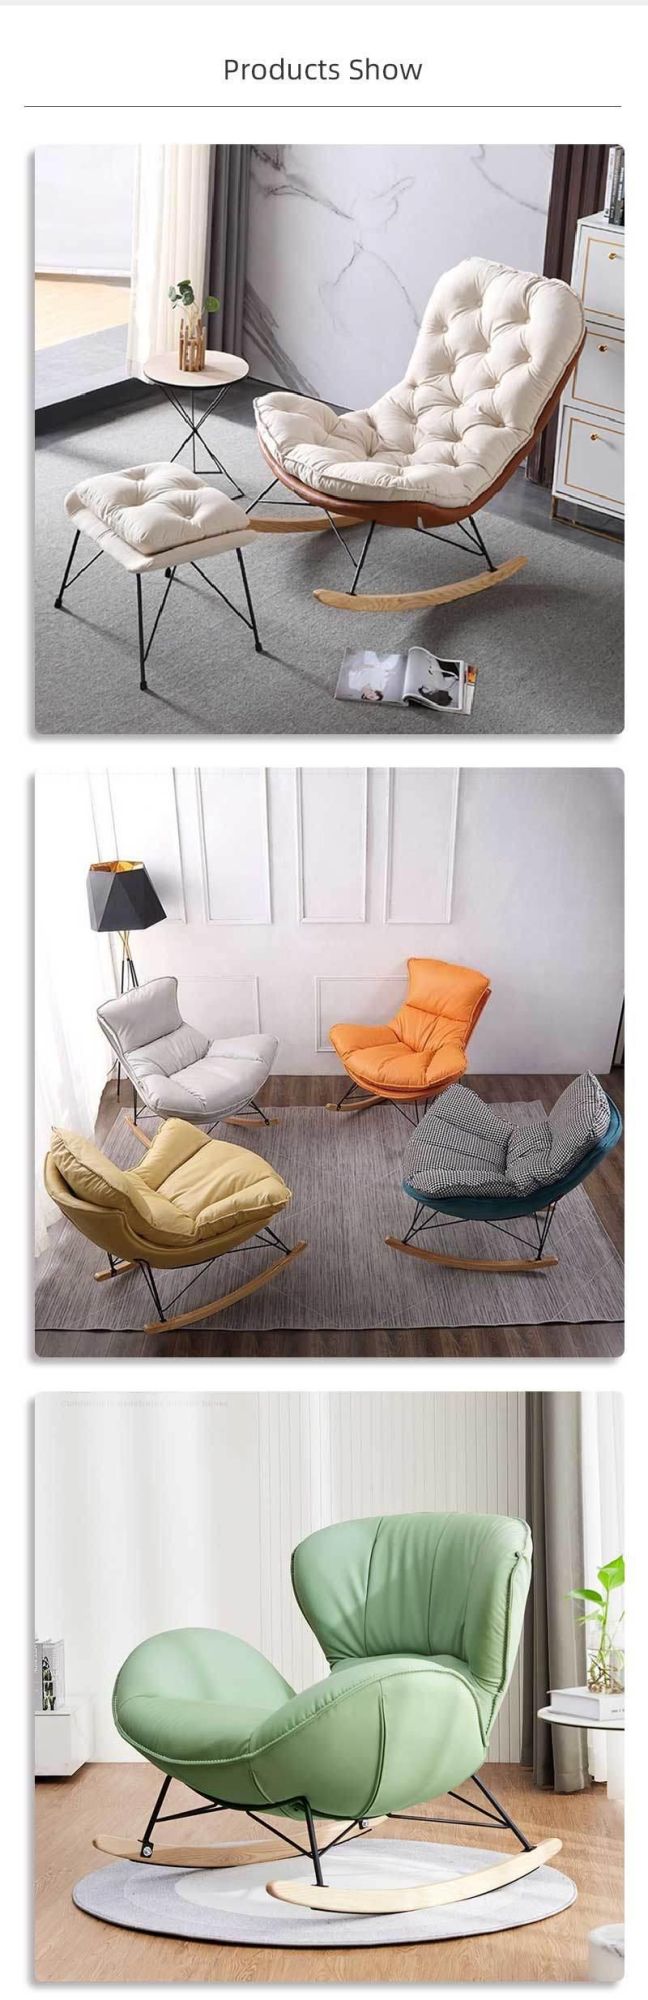 Italian Design Garden Furniture Iron Legs Fabric Leisure Chair